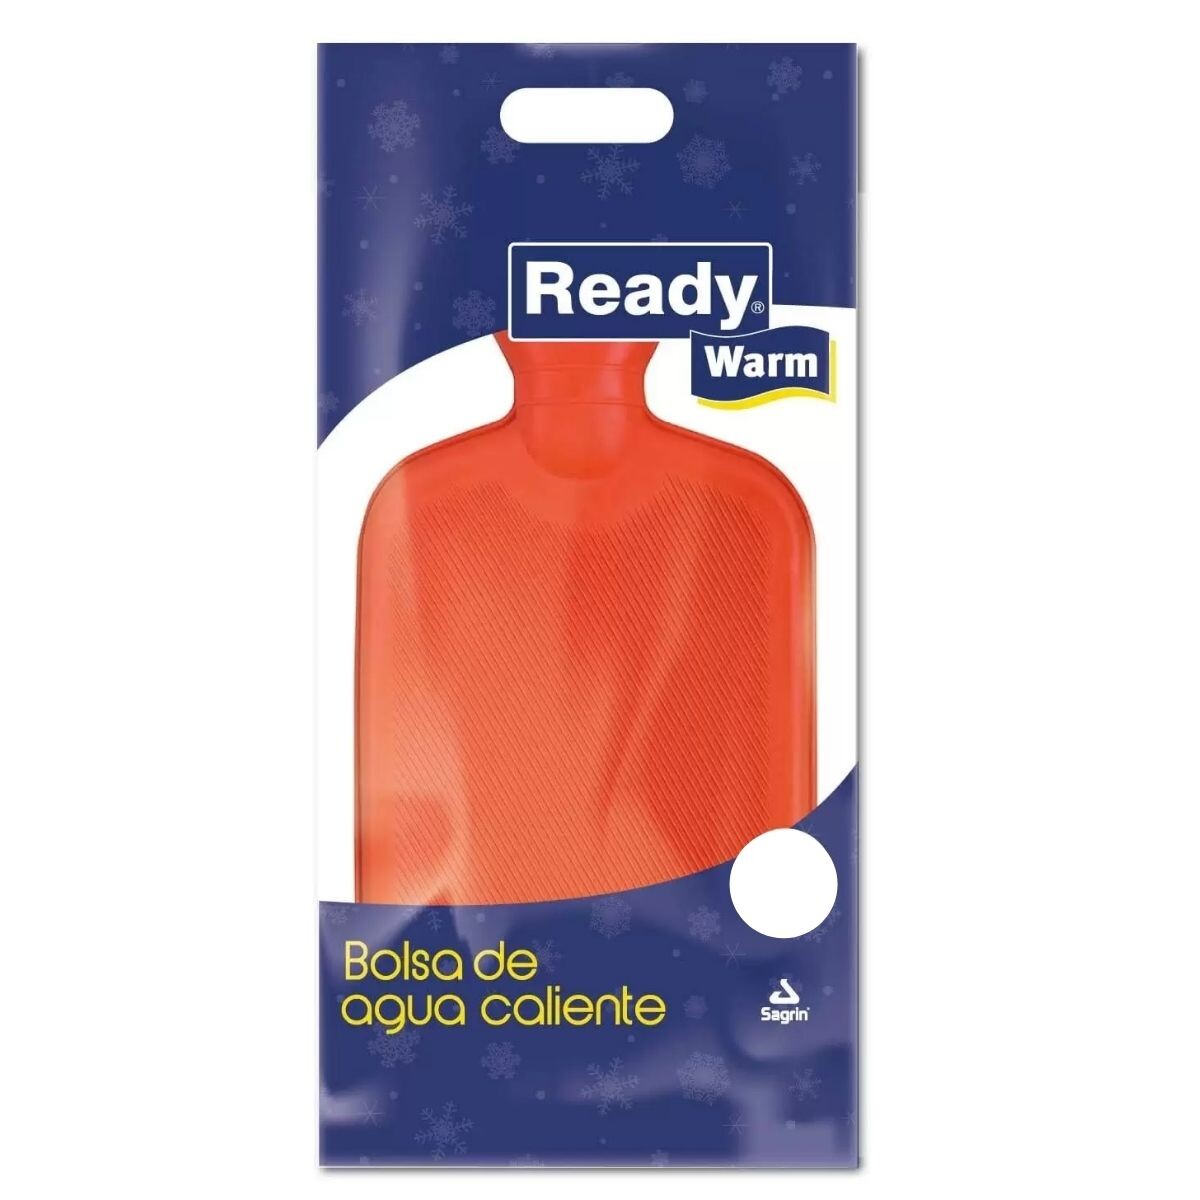 Bolsas de Agua Caliente Ready Warm - 1.5 LT 